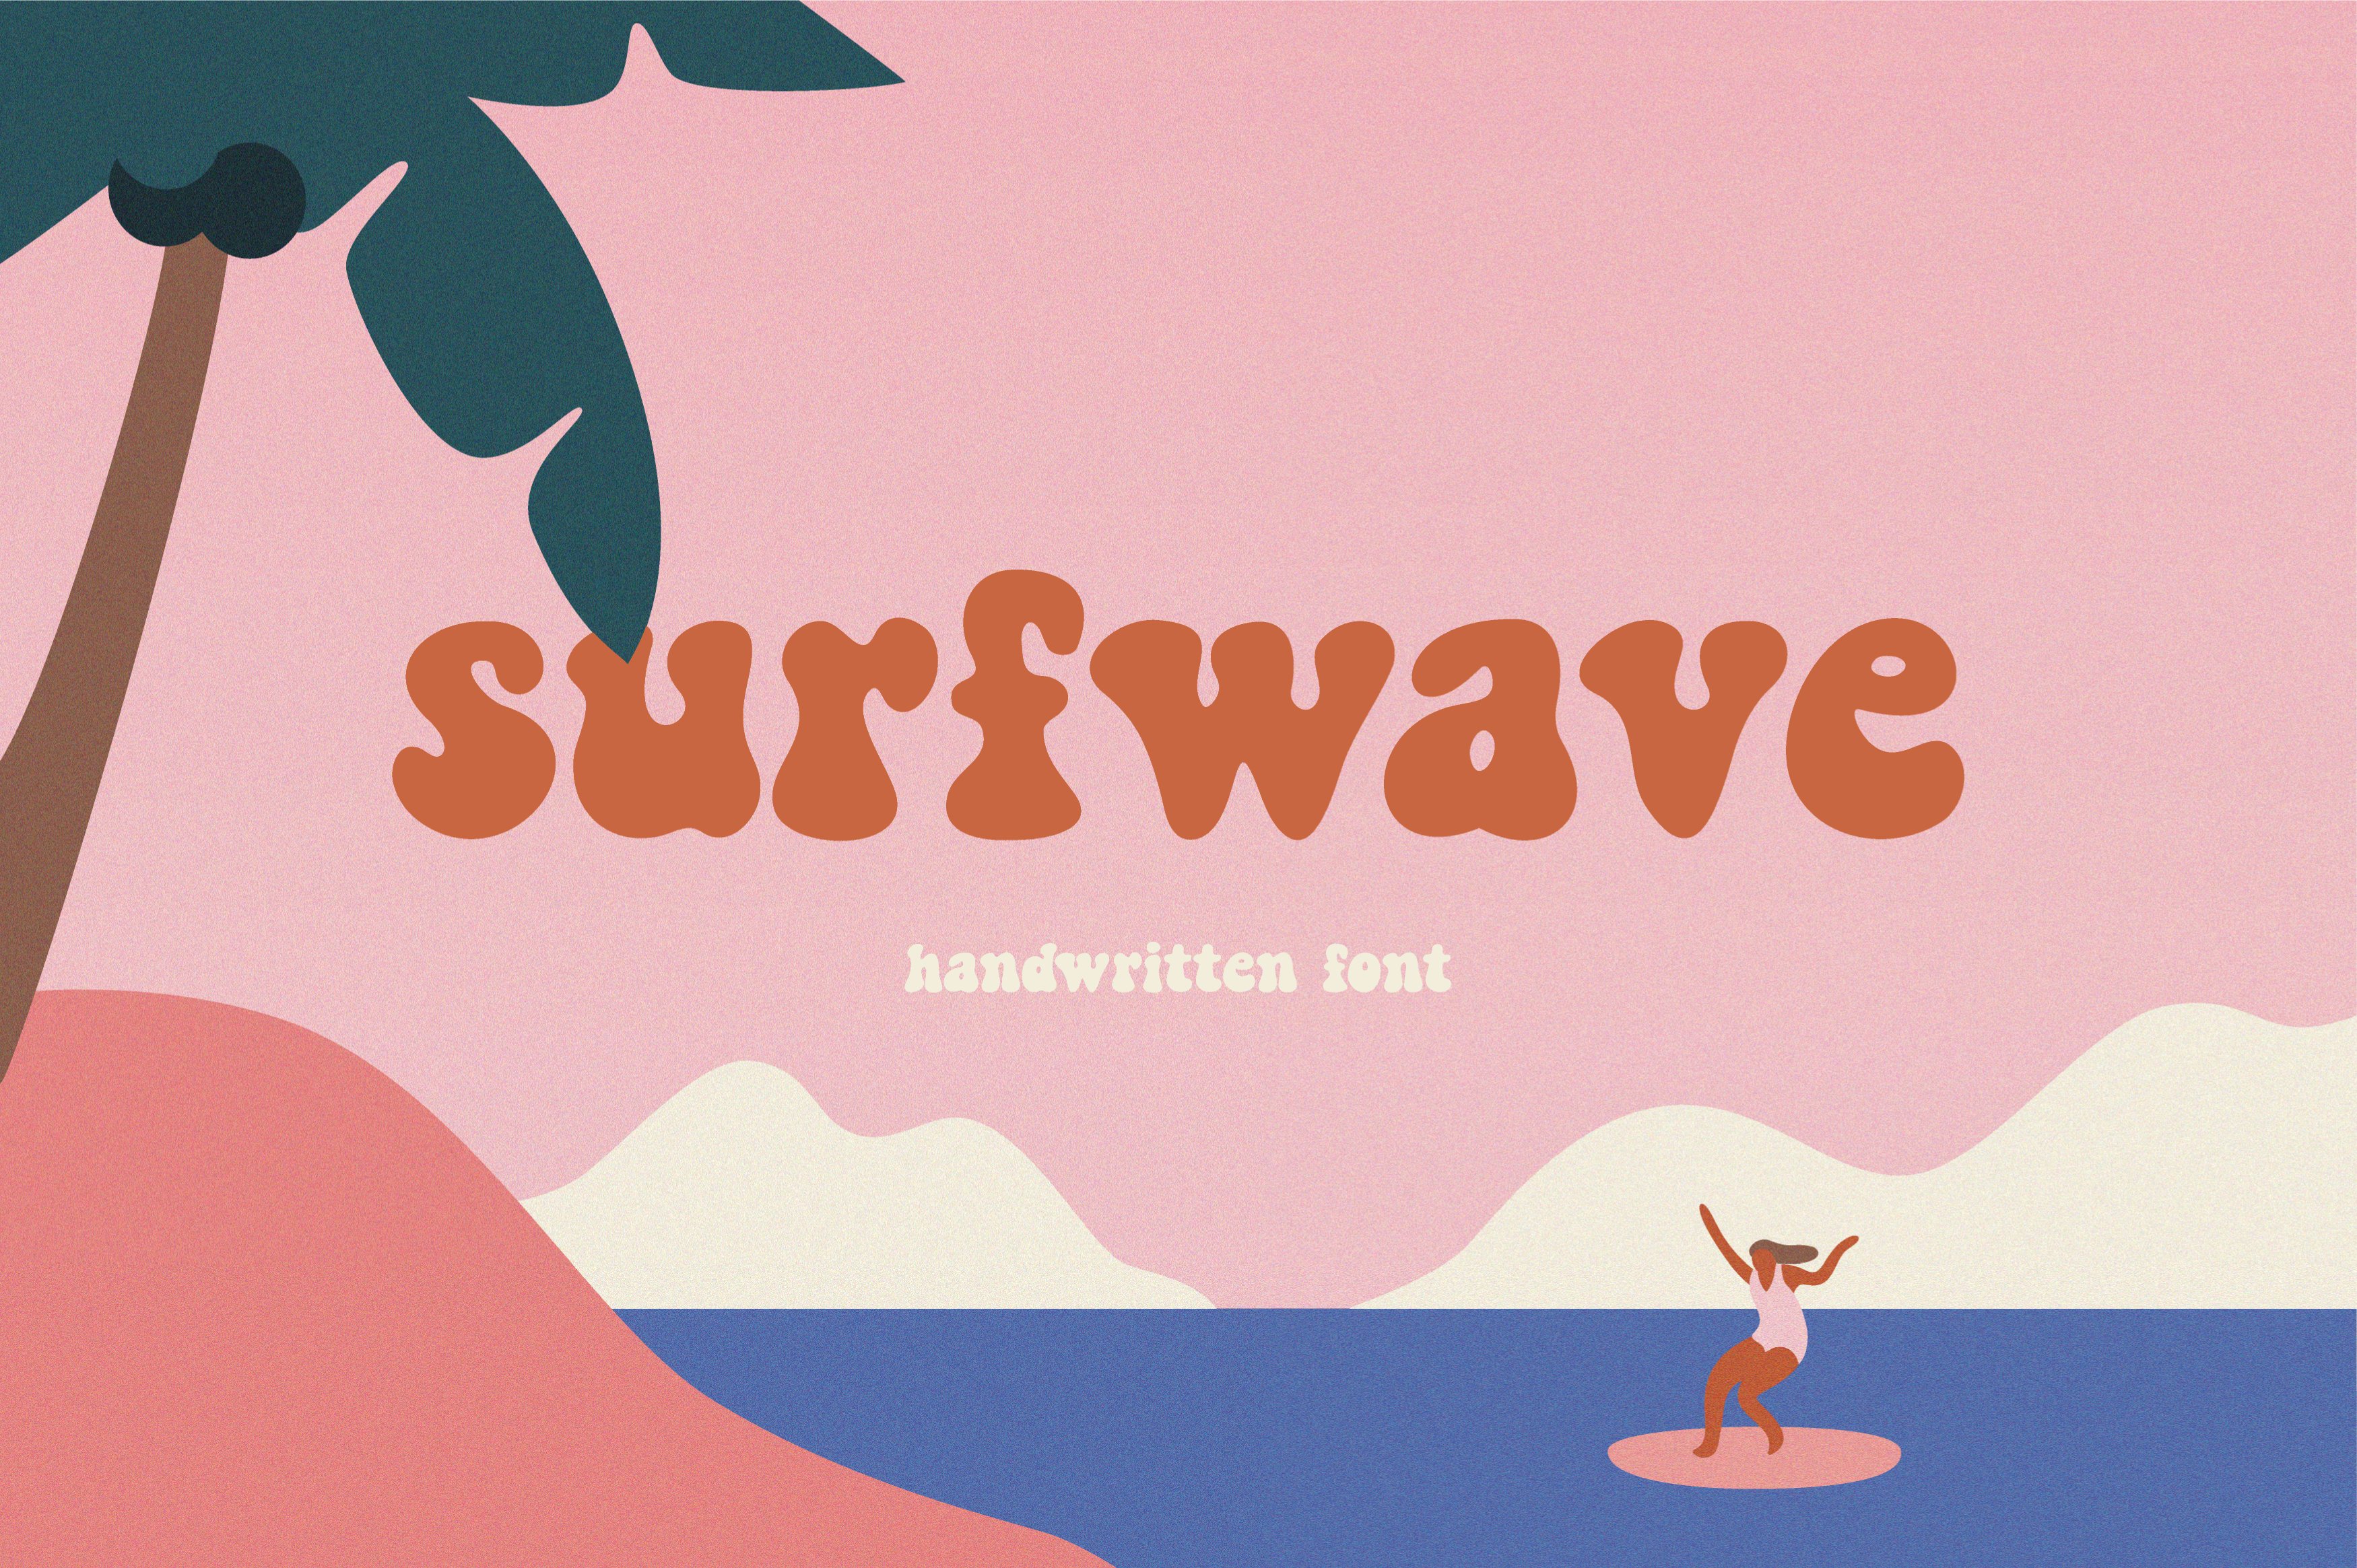 Surfwave | Handwritten font cover image.